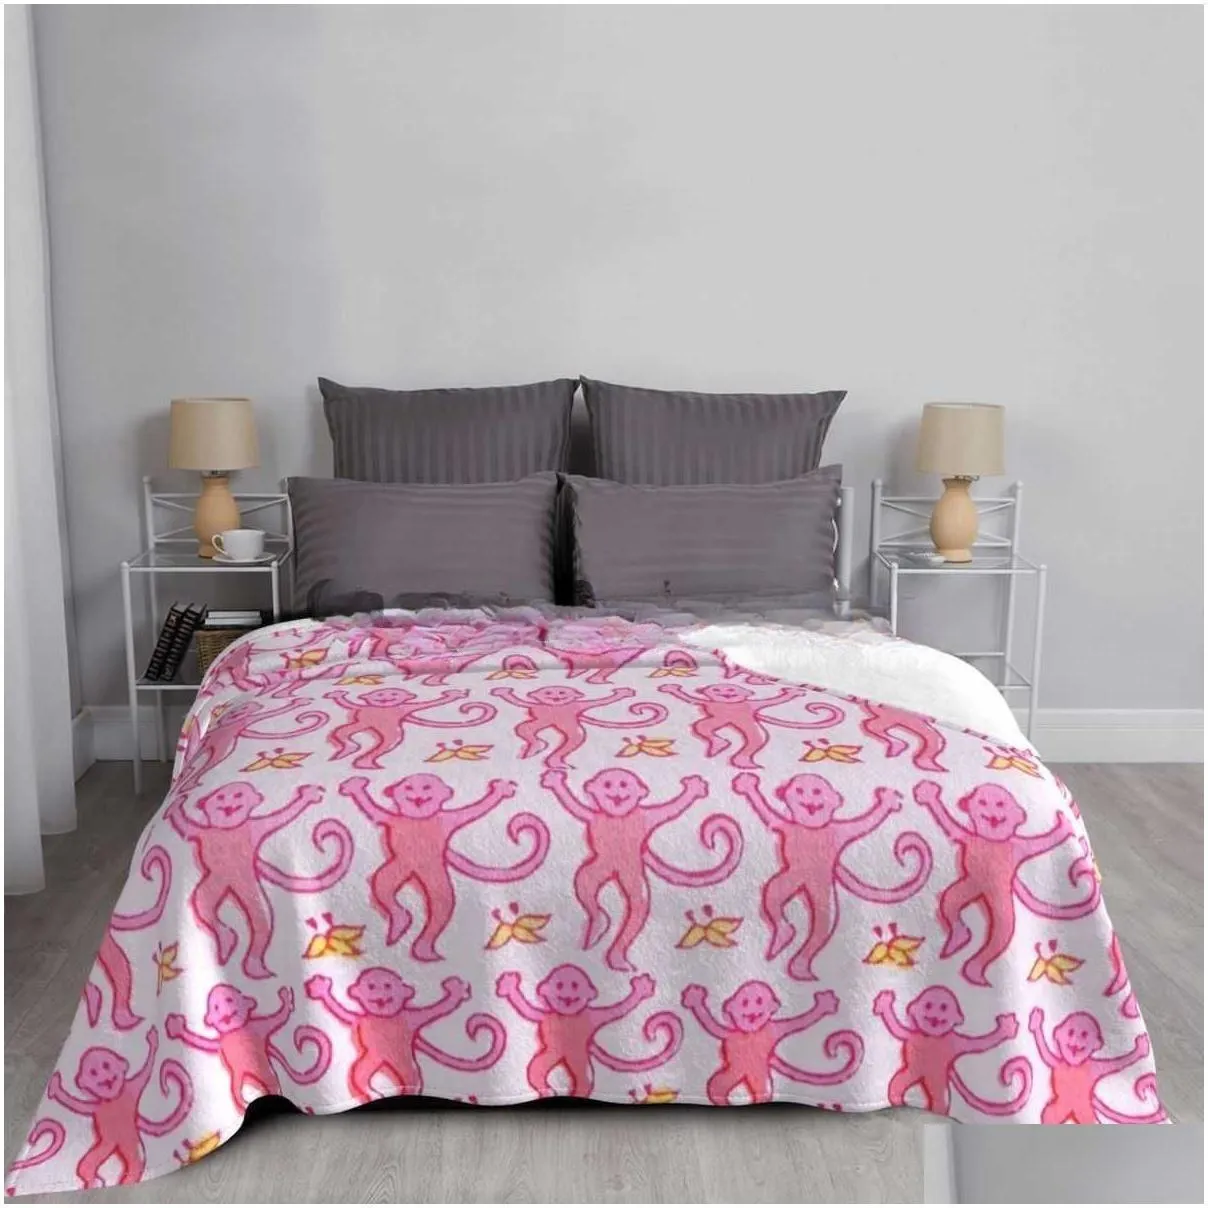 blankets blankets pink roller rabbit blankets coral fleece plush autumnwinter cute animal super soft throw blanket for bedding office